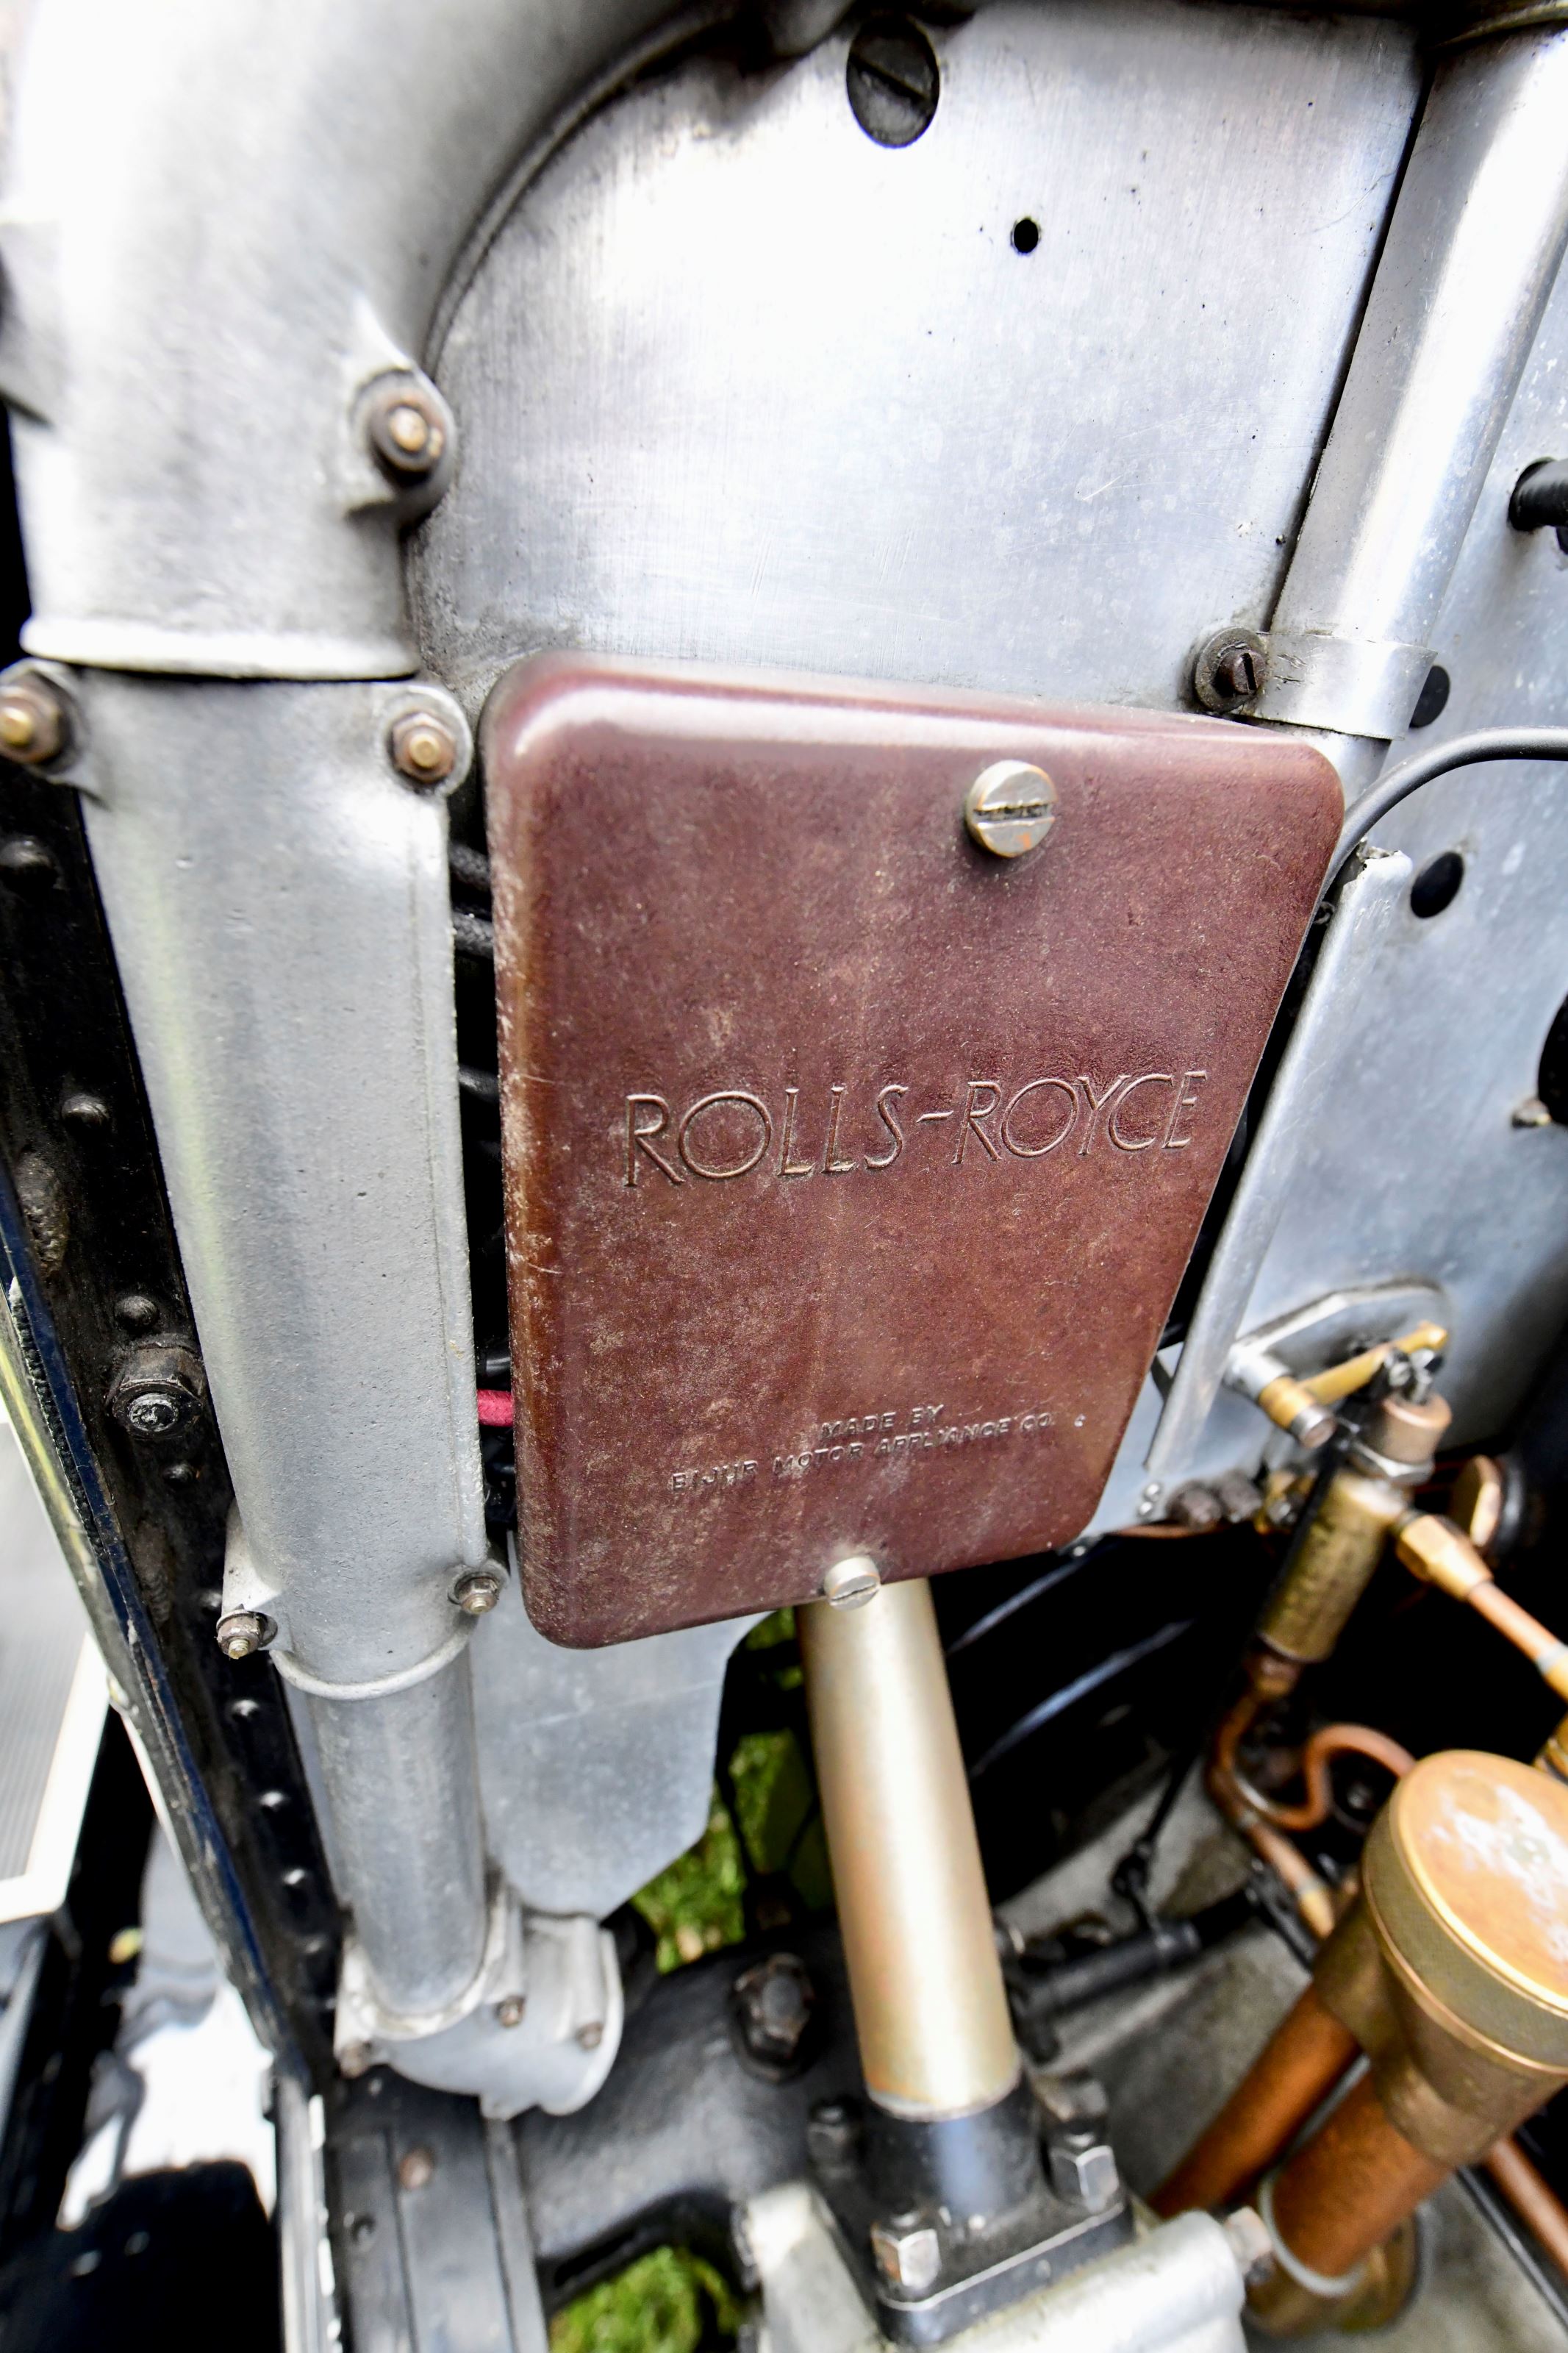 Rolls royce 4050 silver ghost tilbury landaulette by willoughby wn8 bo543unwuonkvi6jt